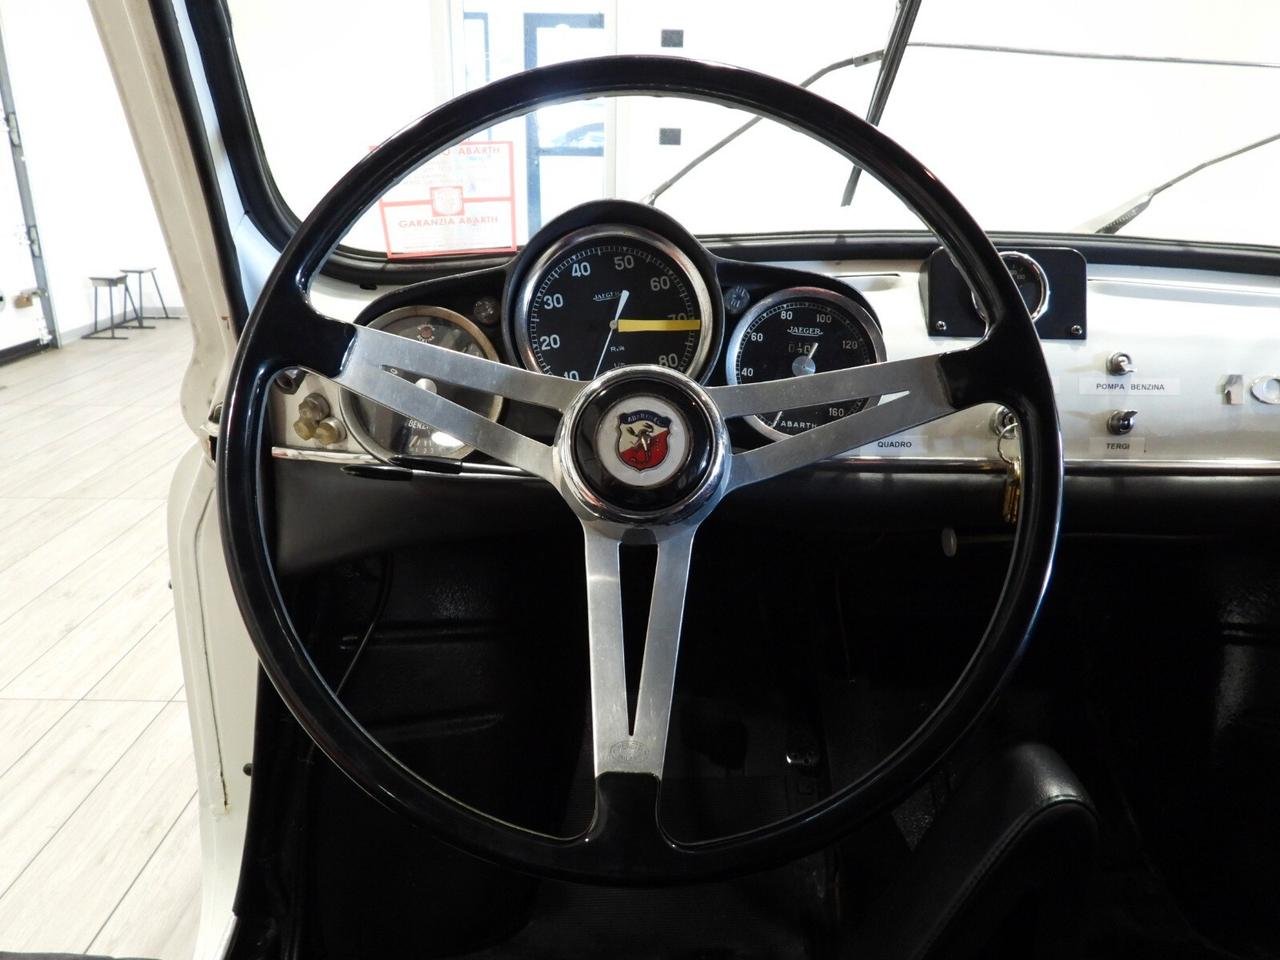 ABARTH FIAT 1000 TC (1963)